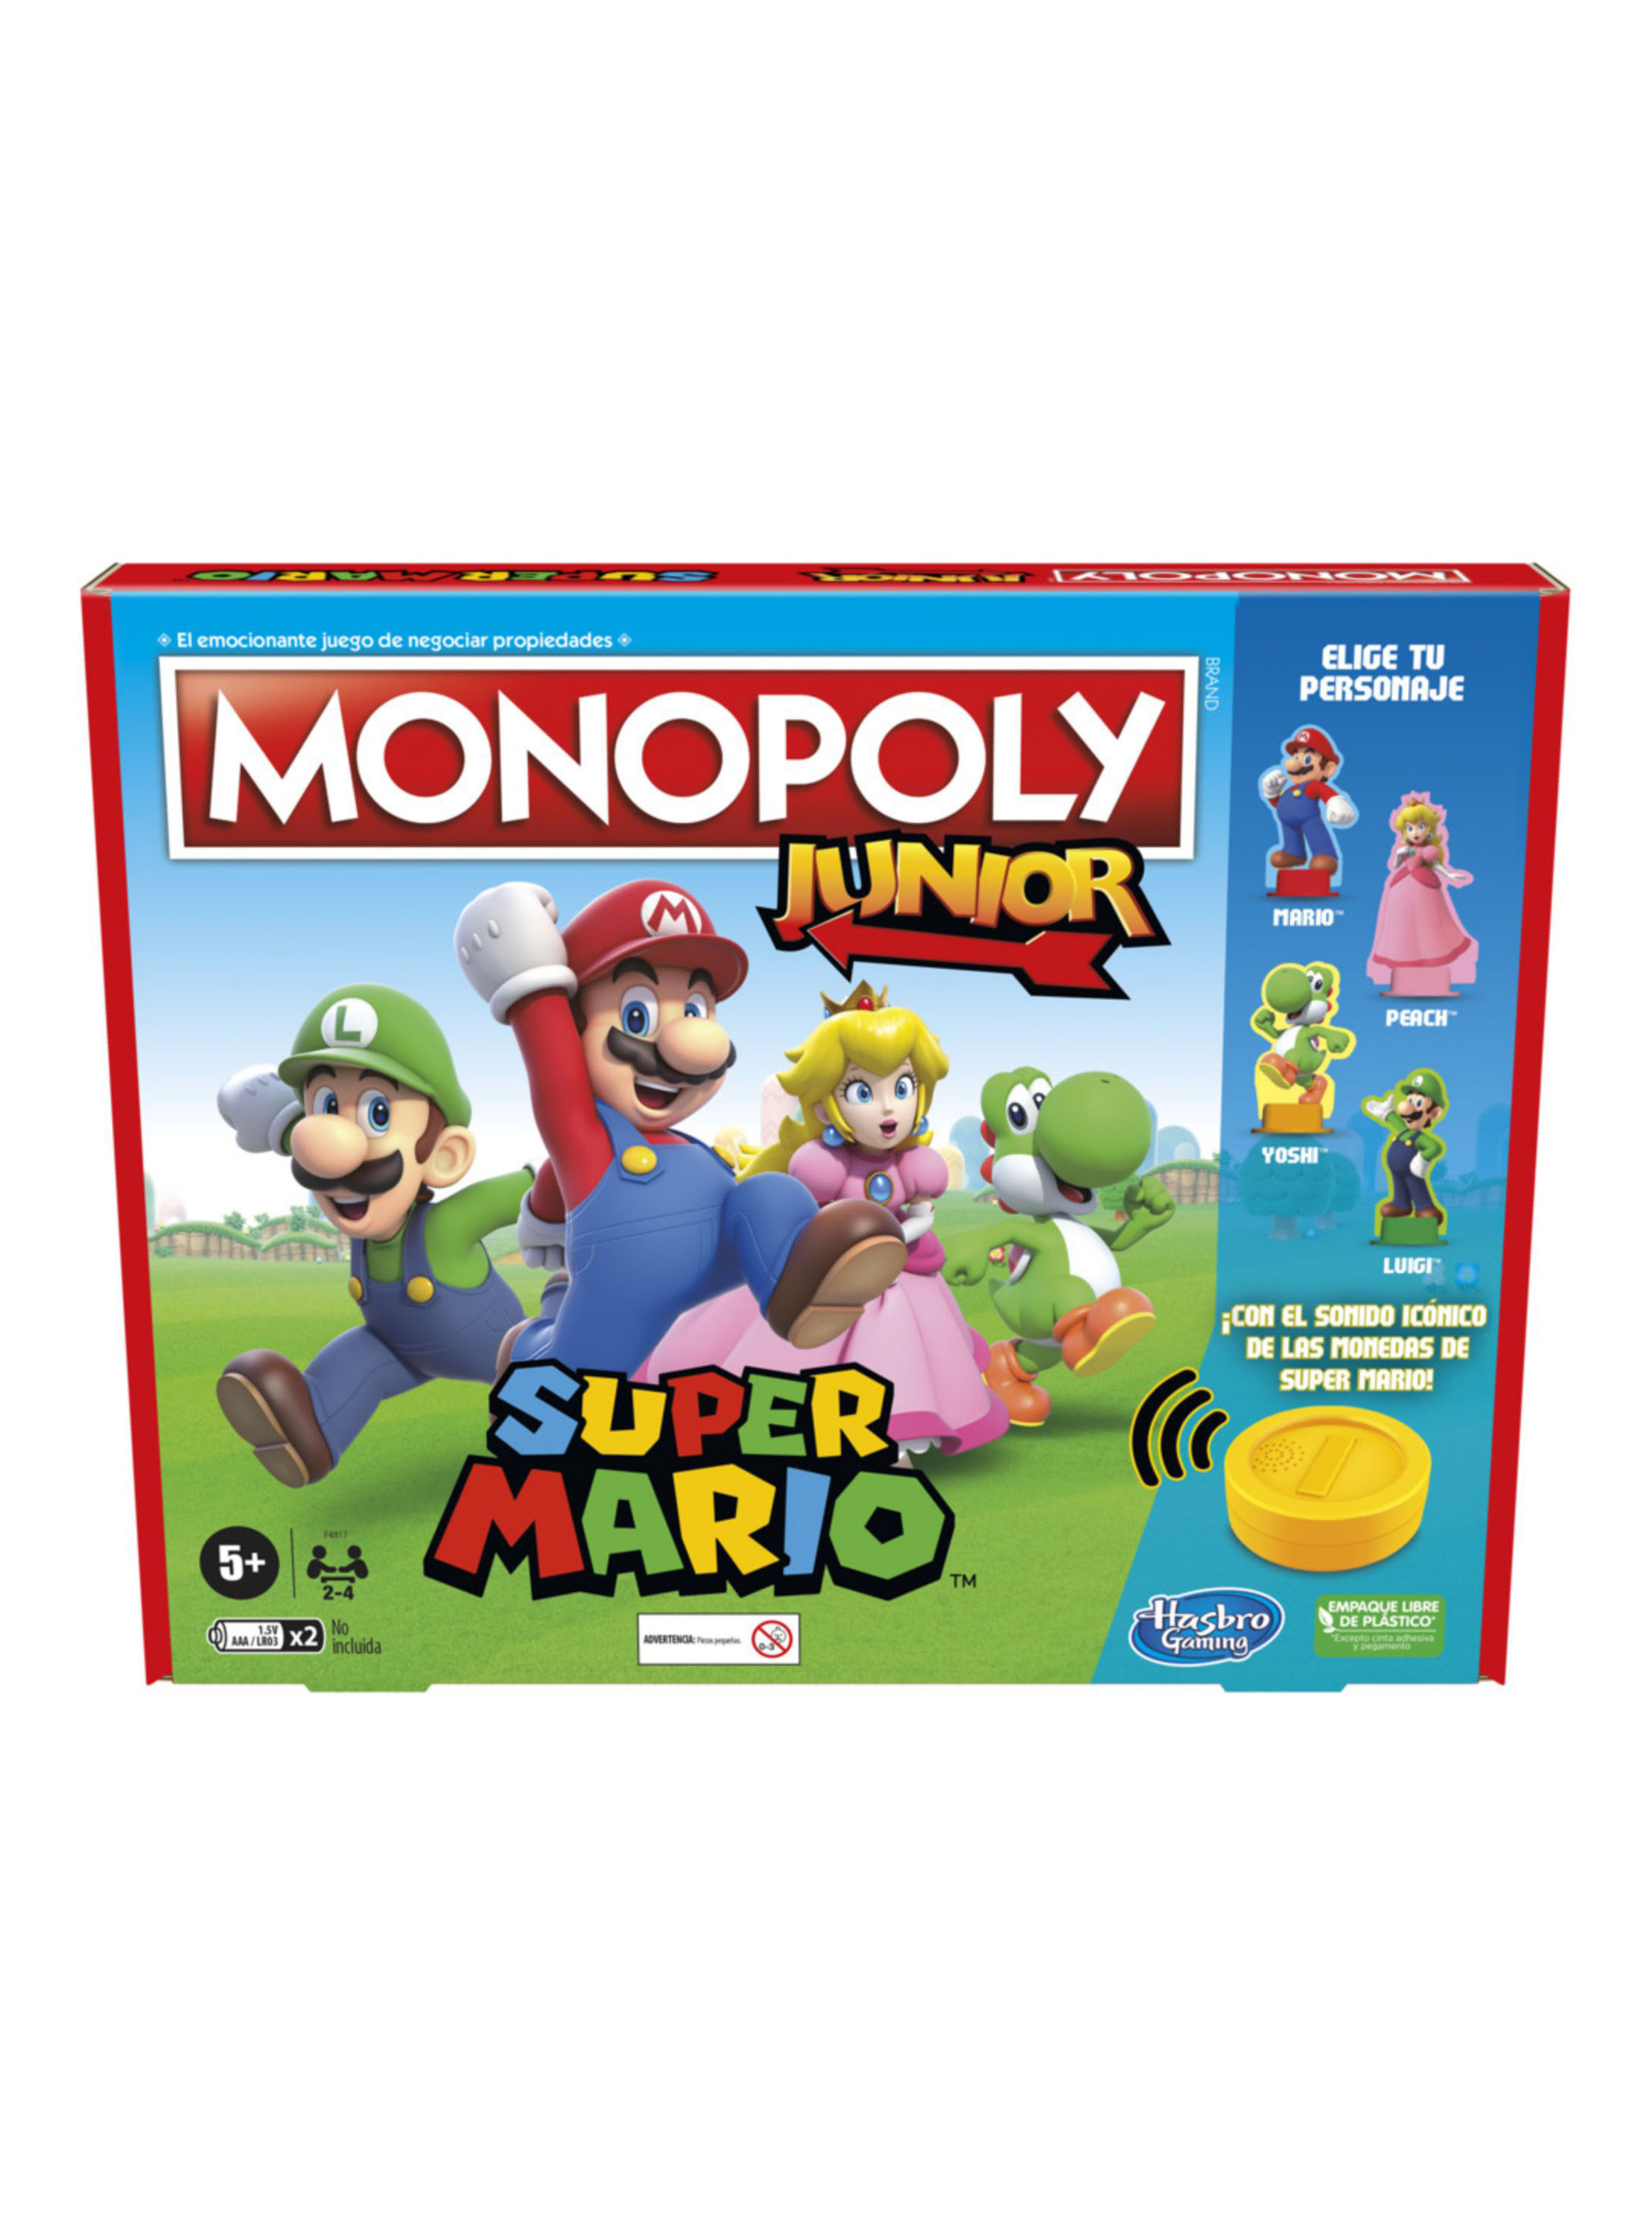 Monopoly Junior Super Mario